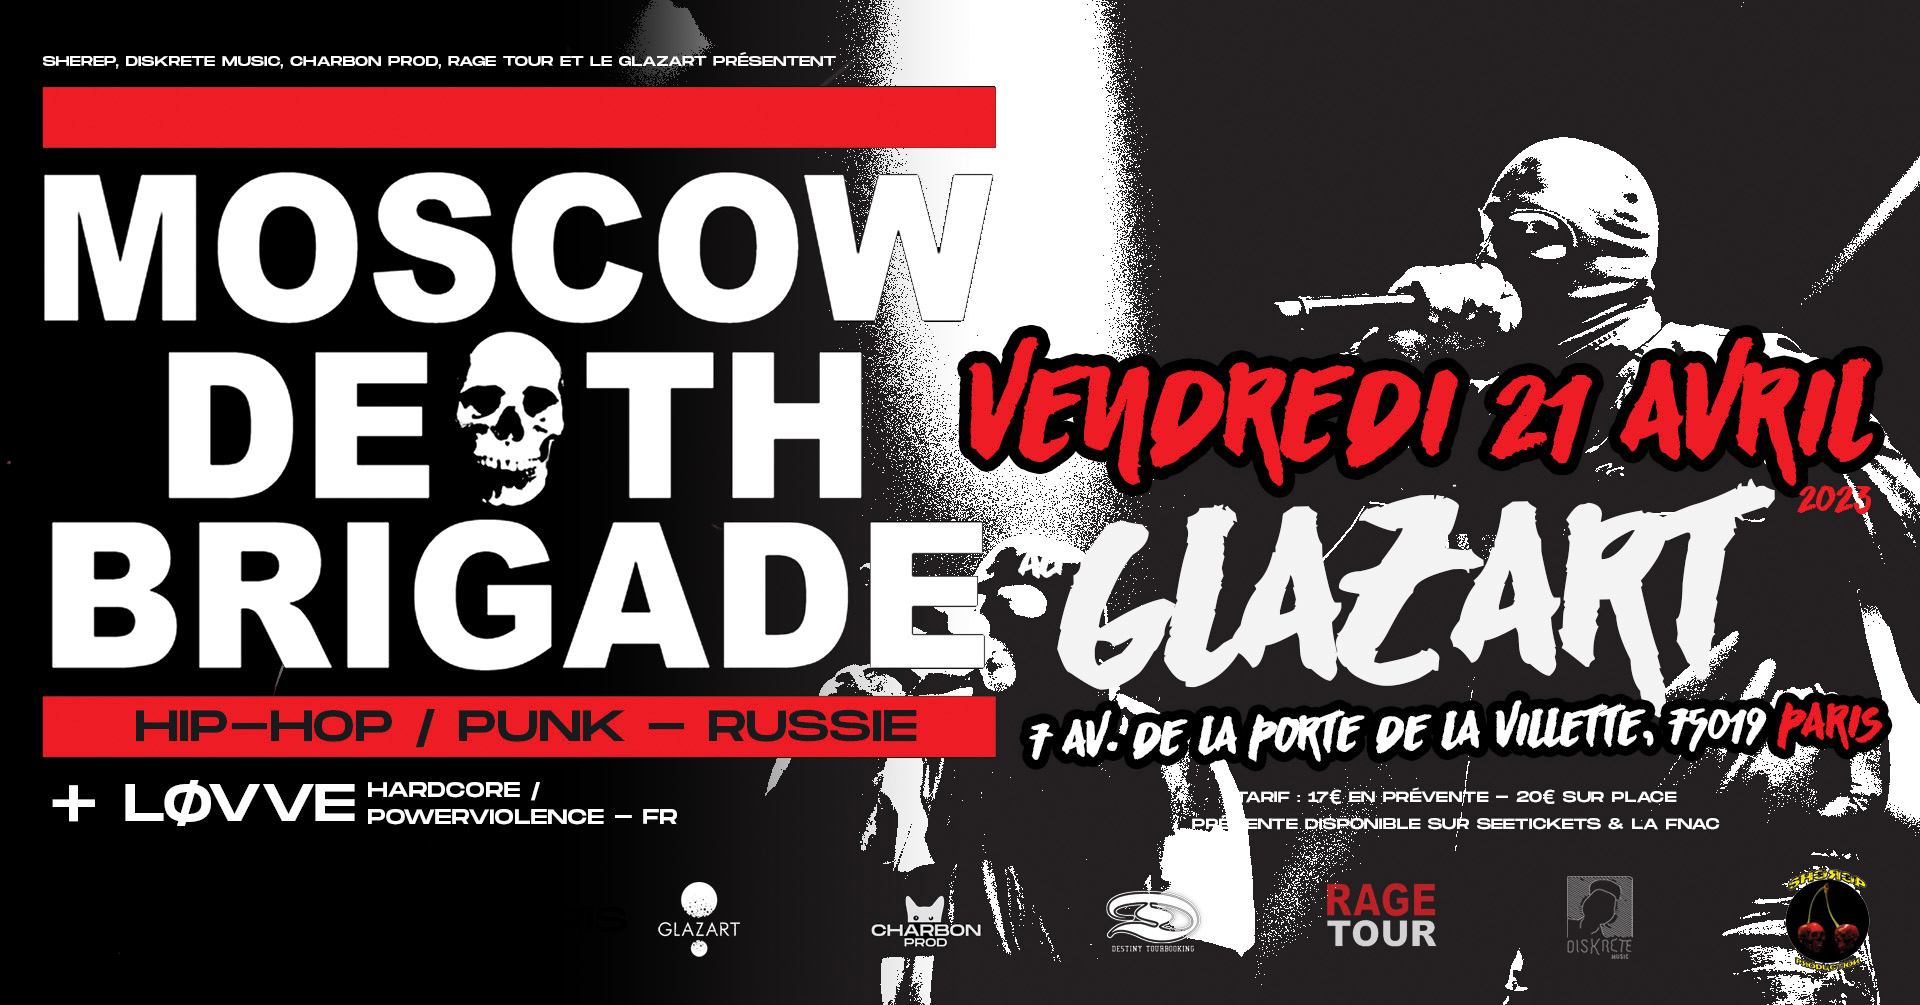 Moscow Death Brigade @ Glazart (Paris), le 21 Avril 2023